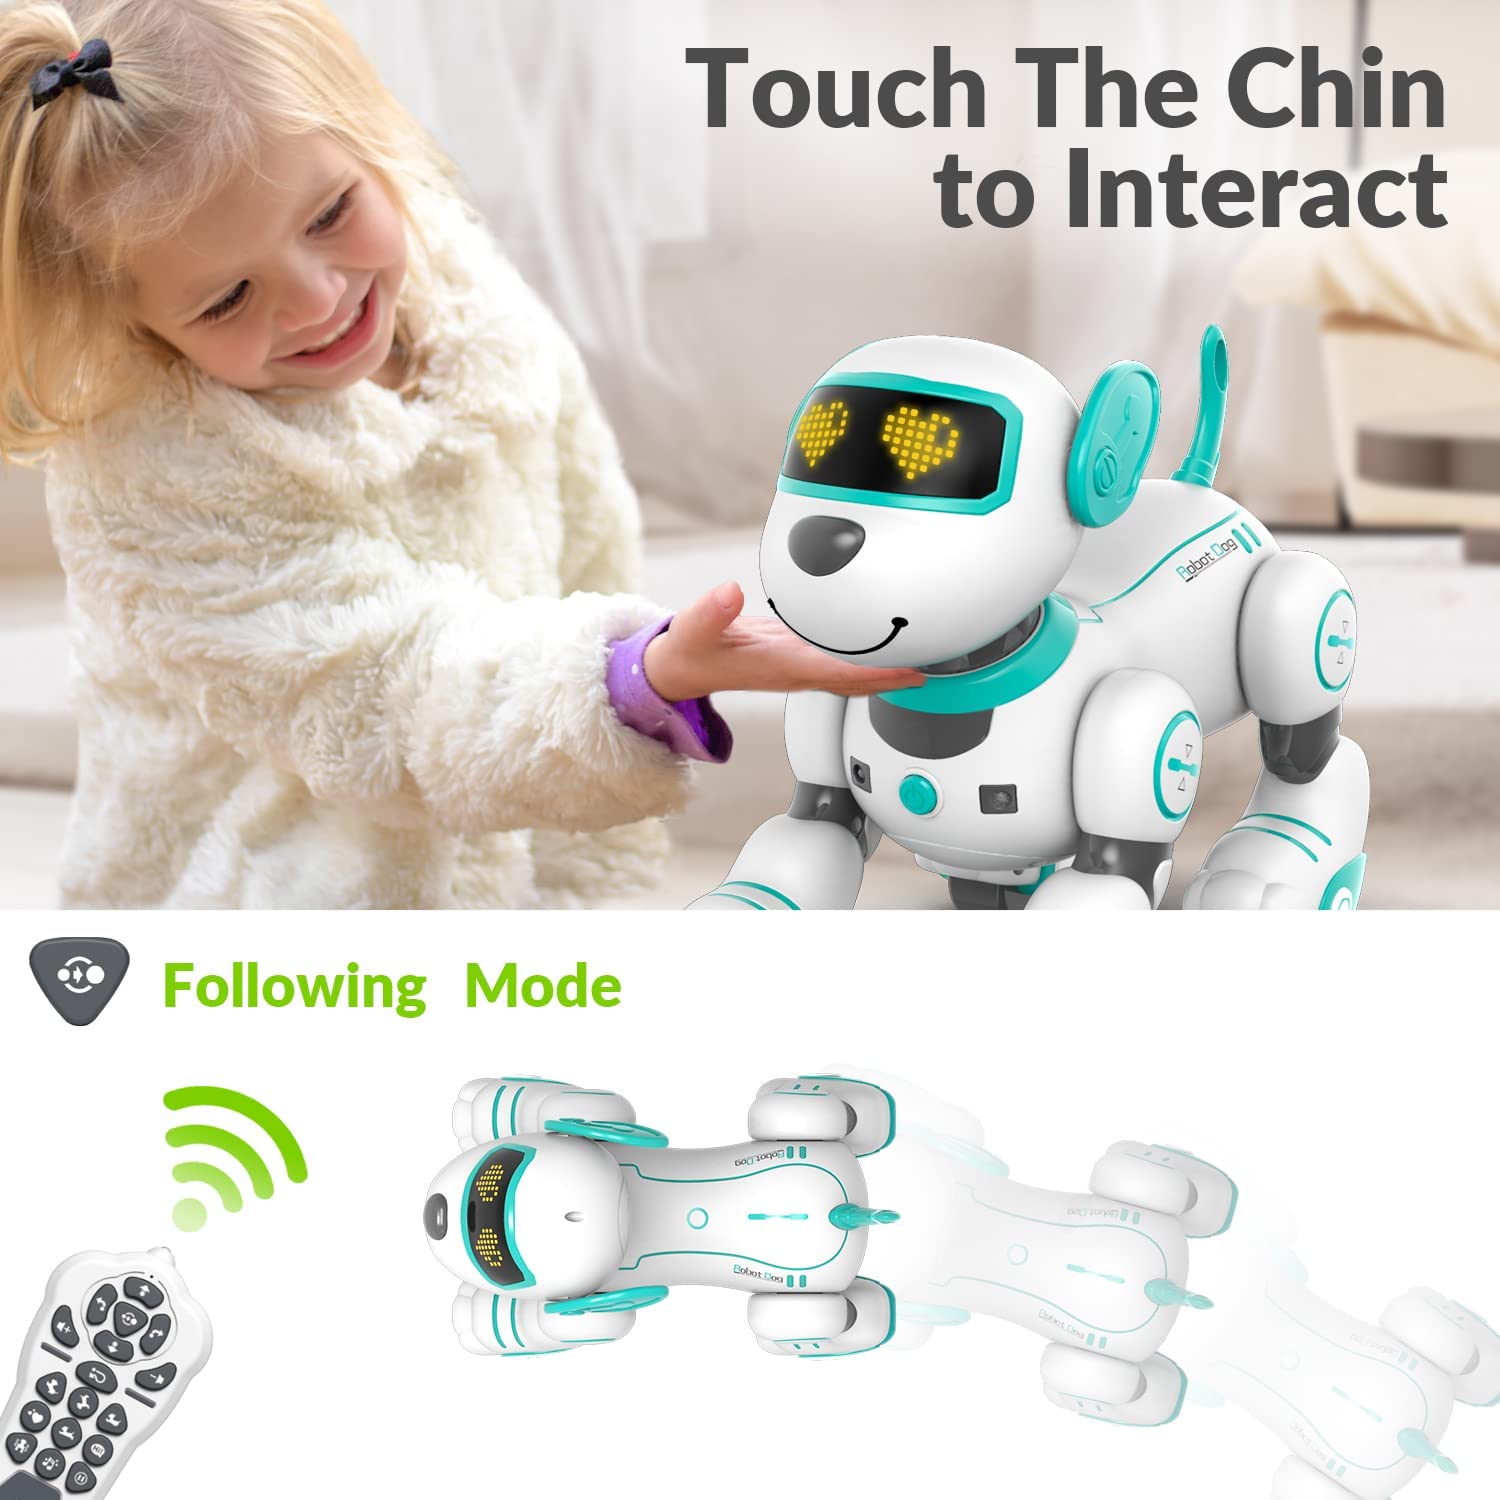  VATOS 2PCS RC Robot Toys for Kids, Rechargeable Remote